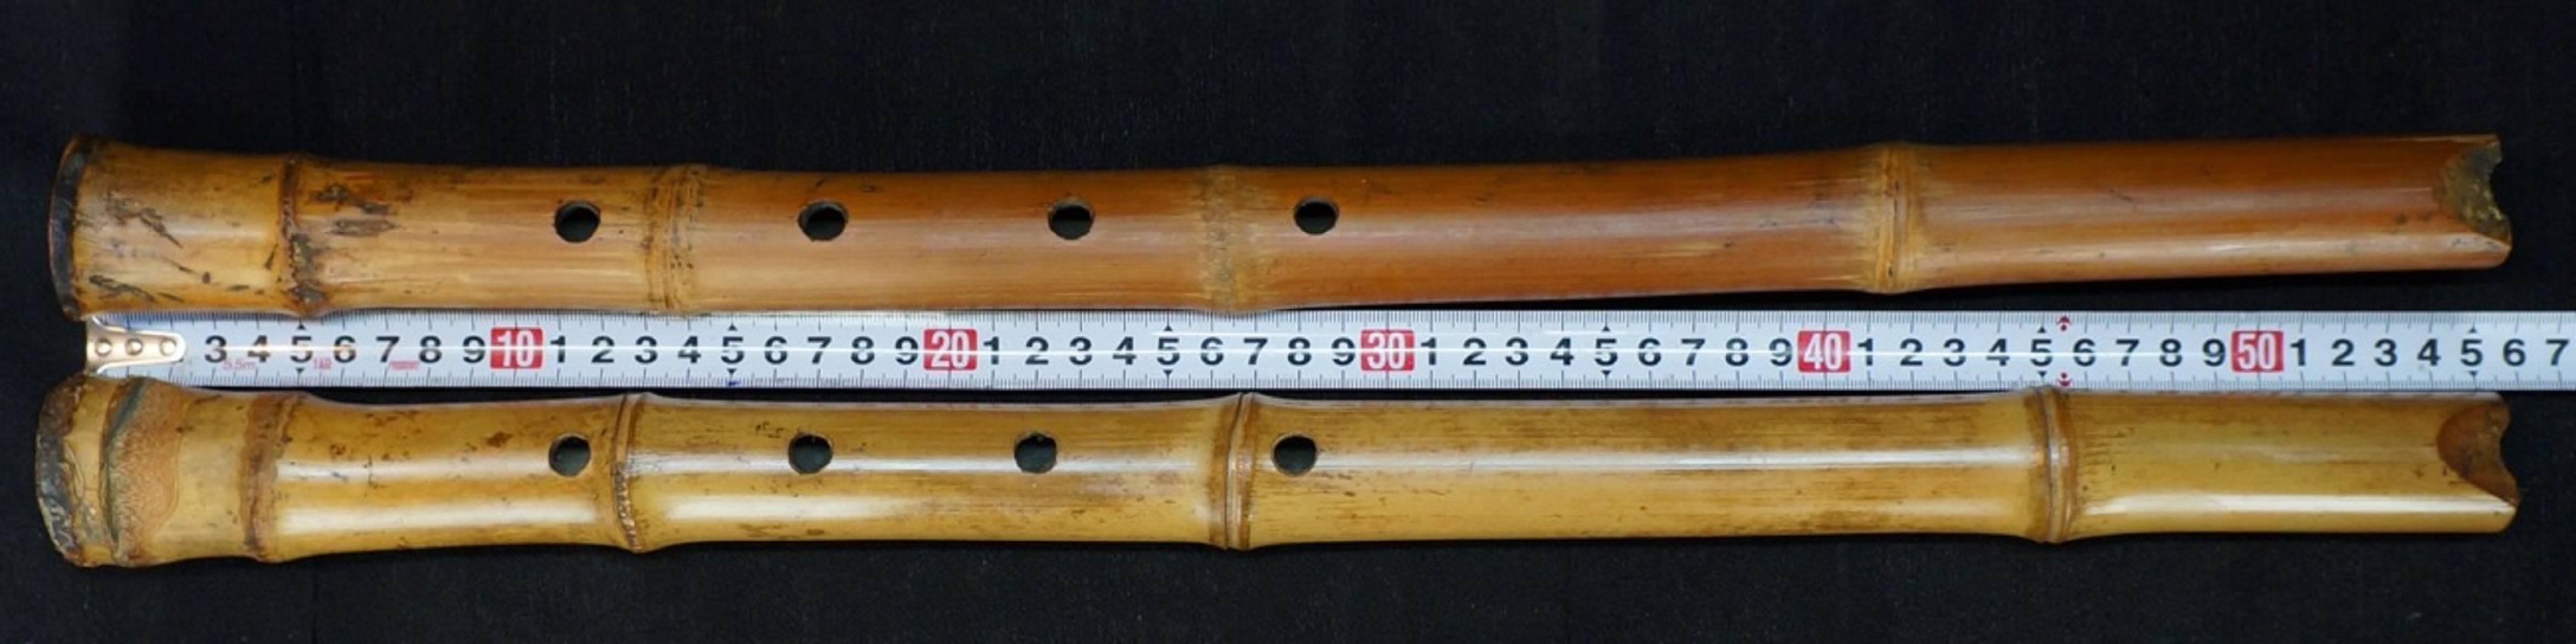 Japan Antique Handmade Pair of Bamboo Shakuhachi Zen Flutes, 1900 1